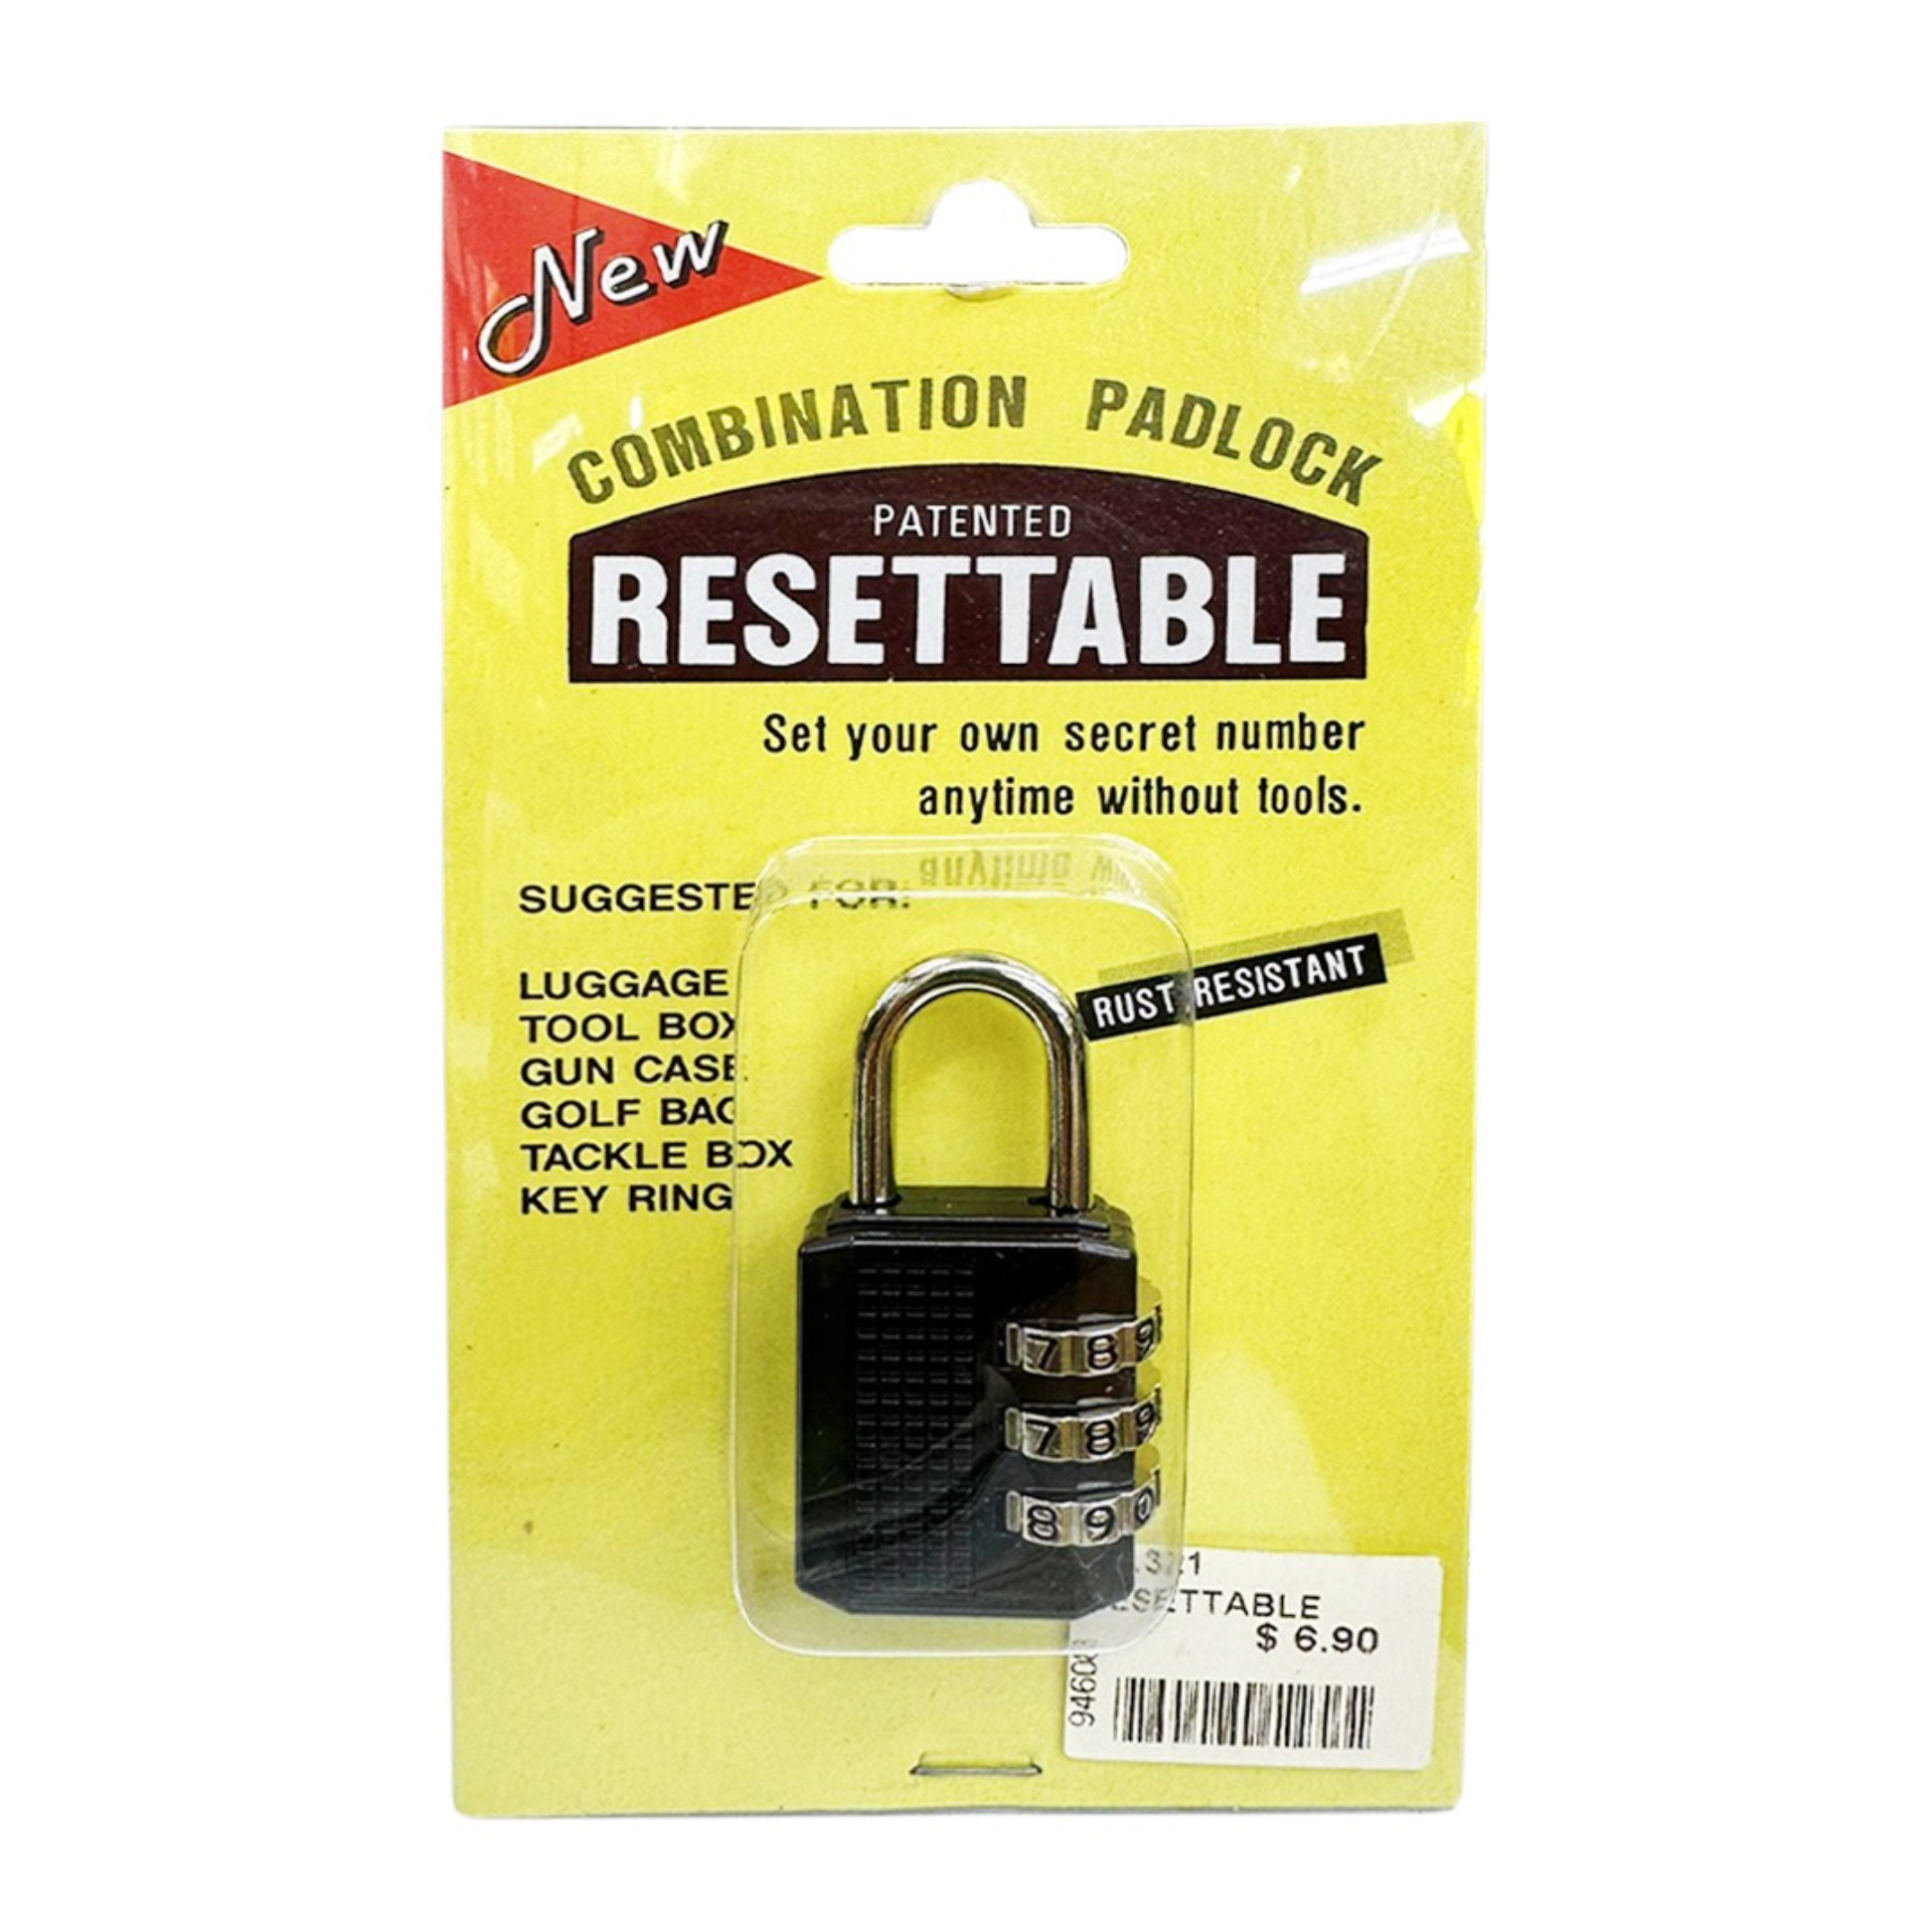 Combination Padlock RESETTABLE Small Luggage Lock